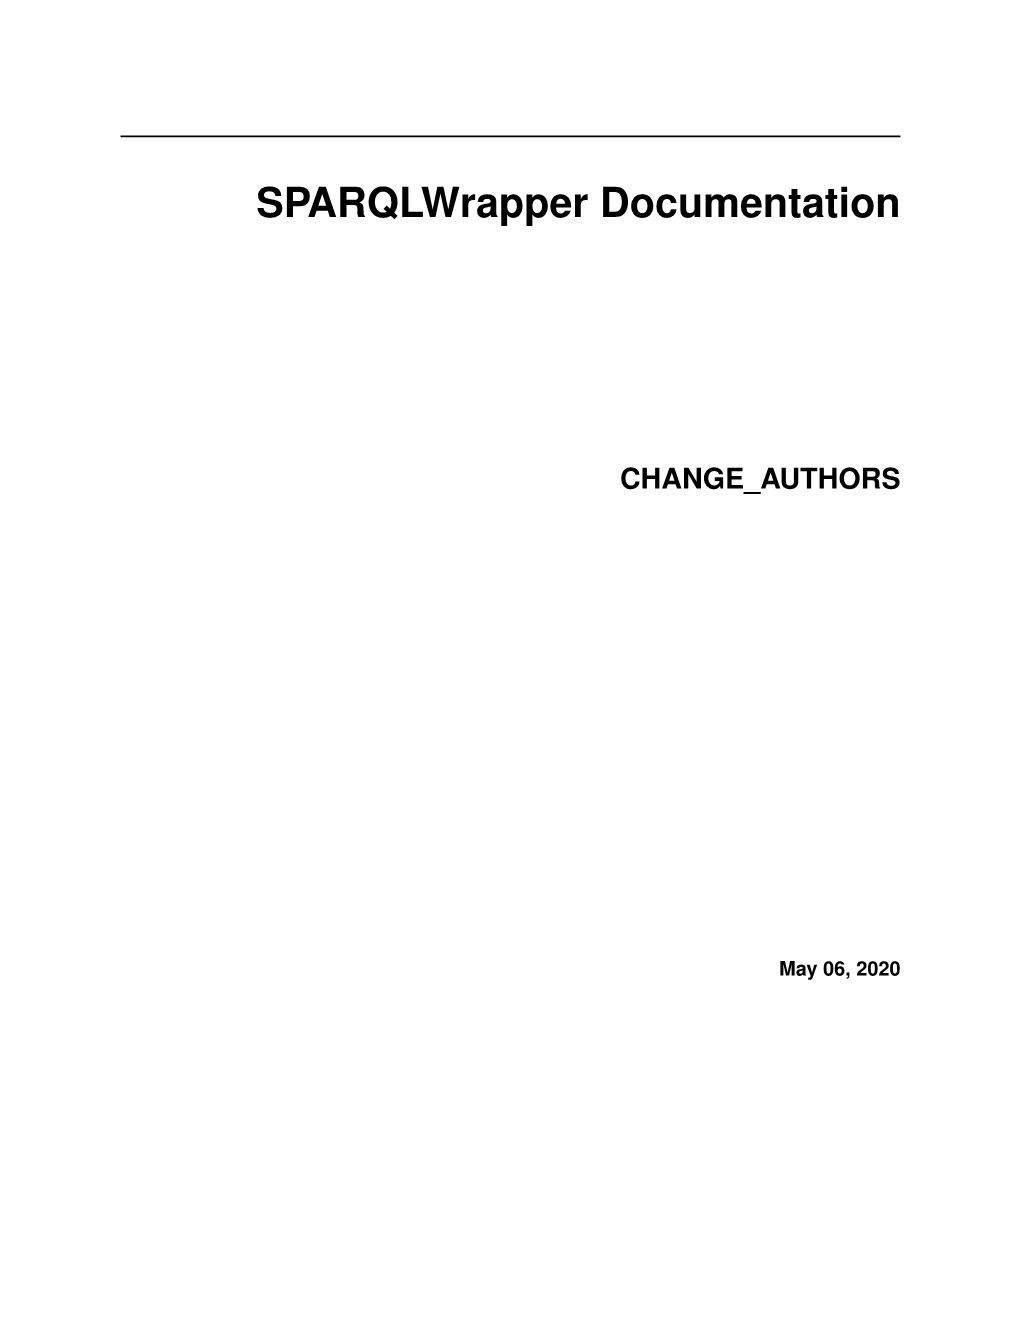 Sparqlwrapper Documentation